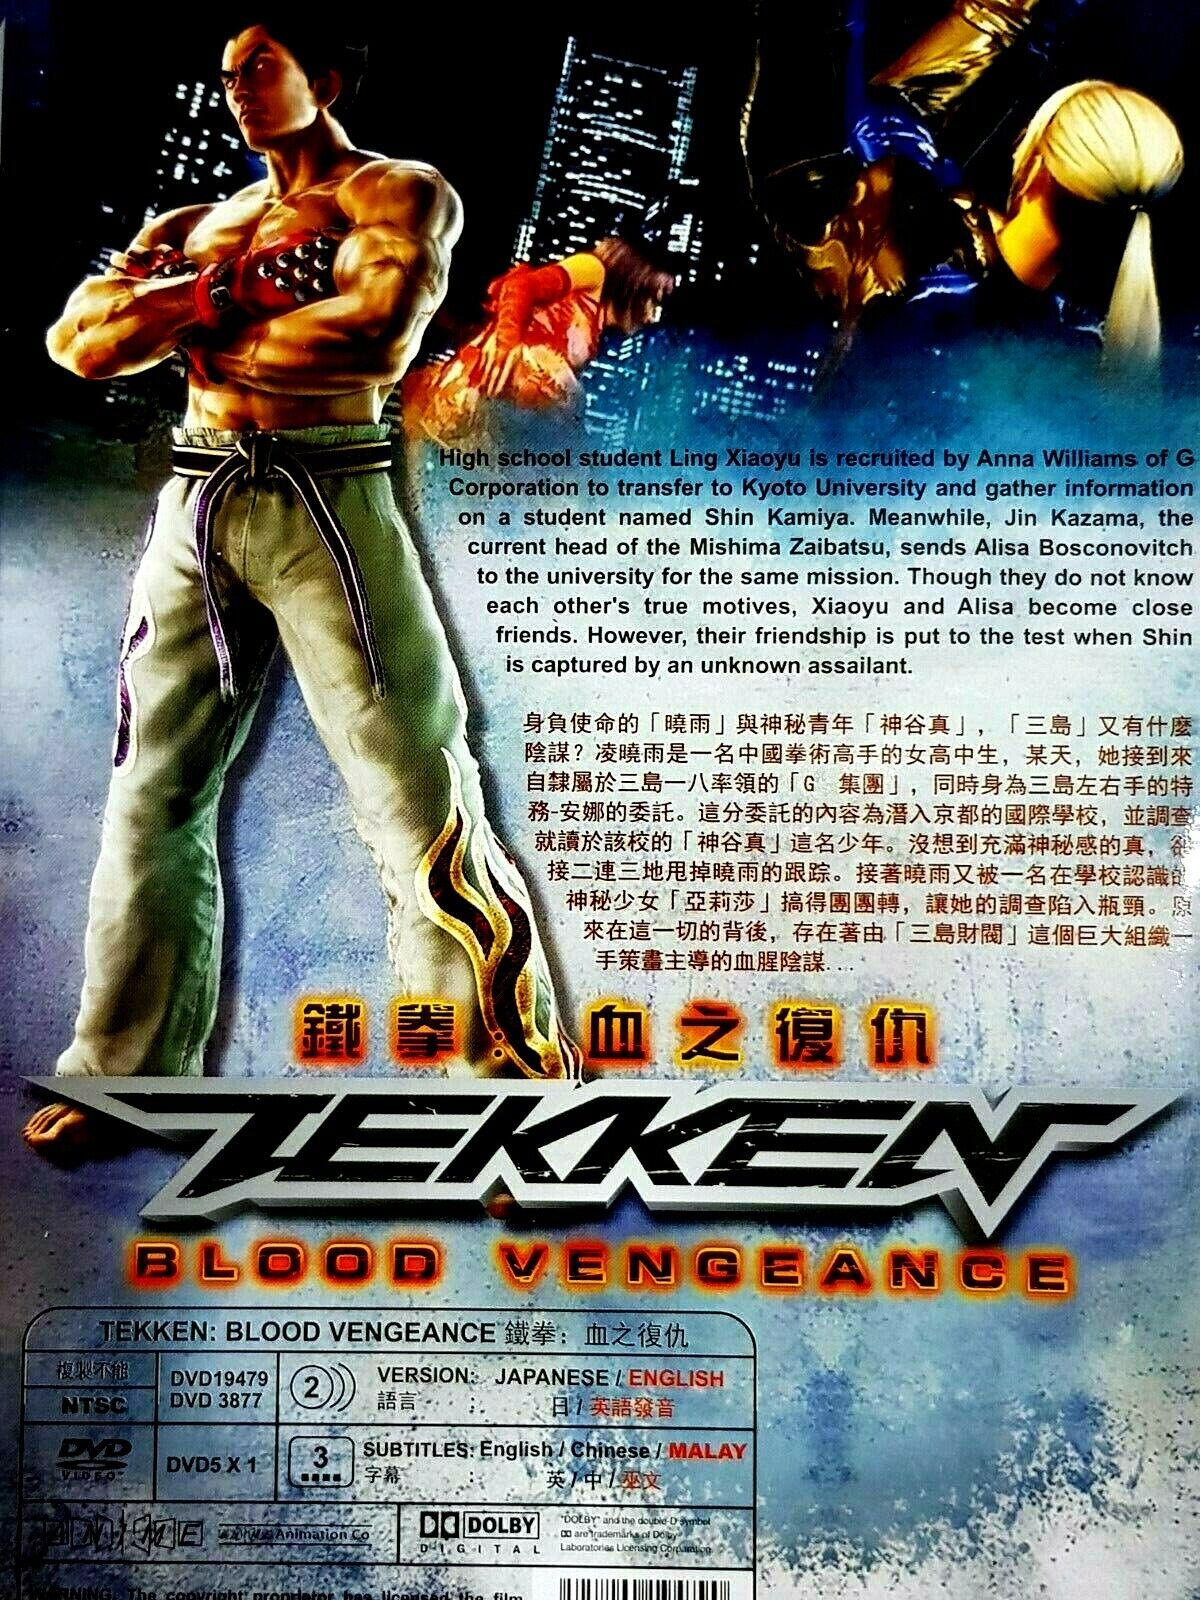 pegatina administración Maravilloso DVD English Version Tekken: Blood Vengeance Movie (2011) Tracking Shipping  | eBay